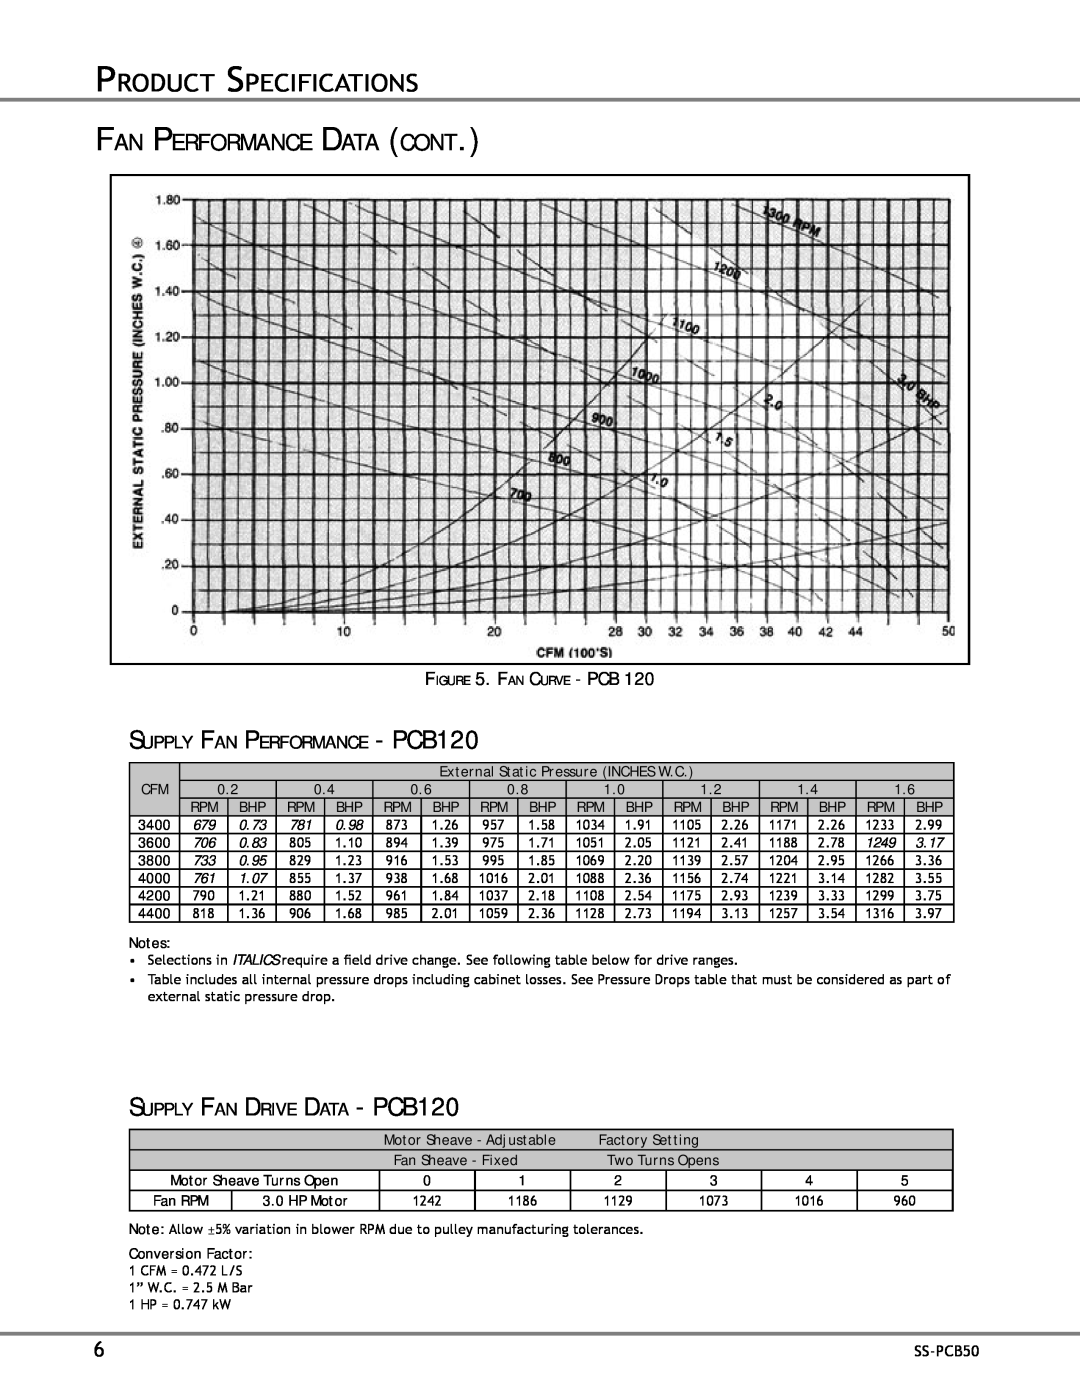 Goodman Mfg SS-PCB50 Fan Performance Data Cont, Fan Curve - Pcb, SUPPLY FAN PERFORMANCE - PCB120, Product Specifications 